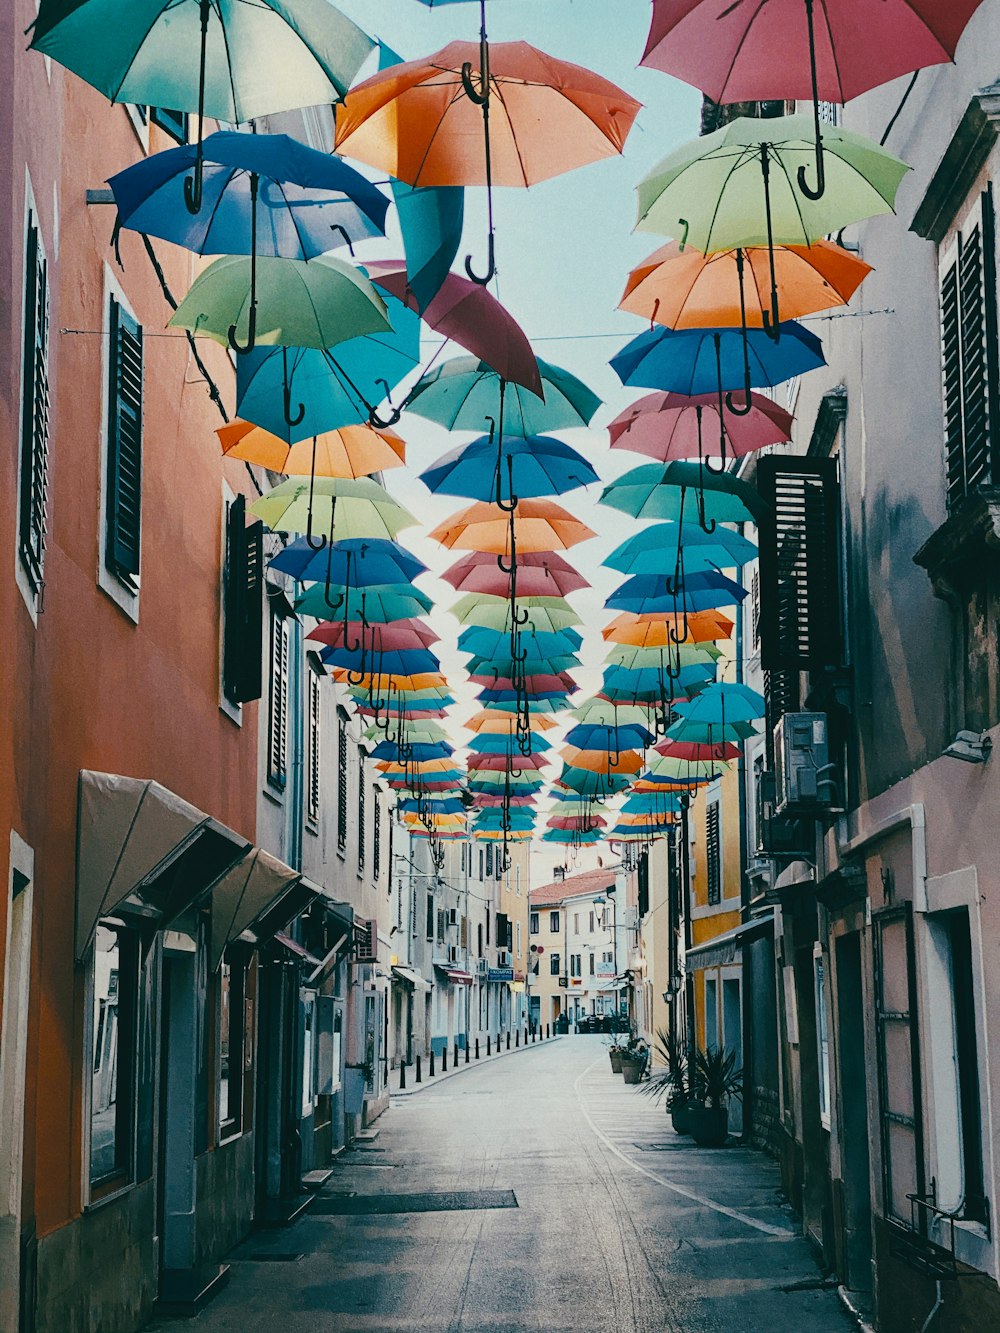 umbrella hanging on the street during daytime